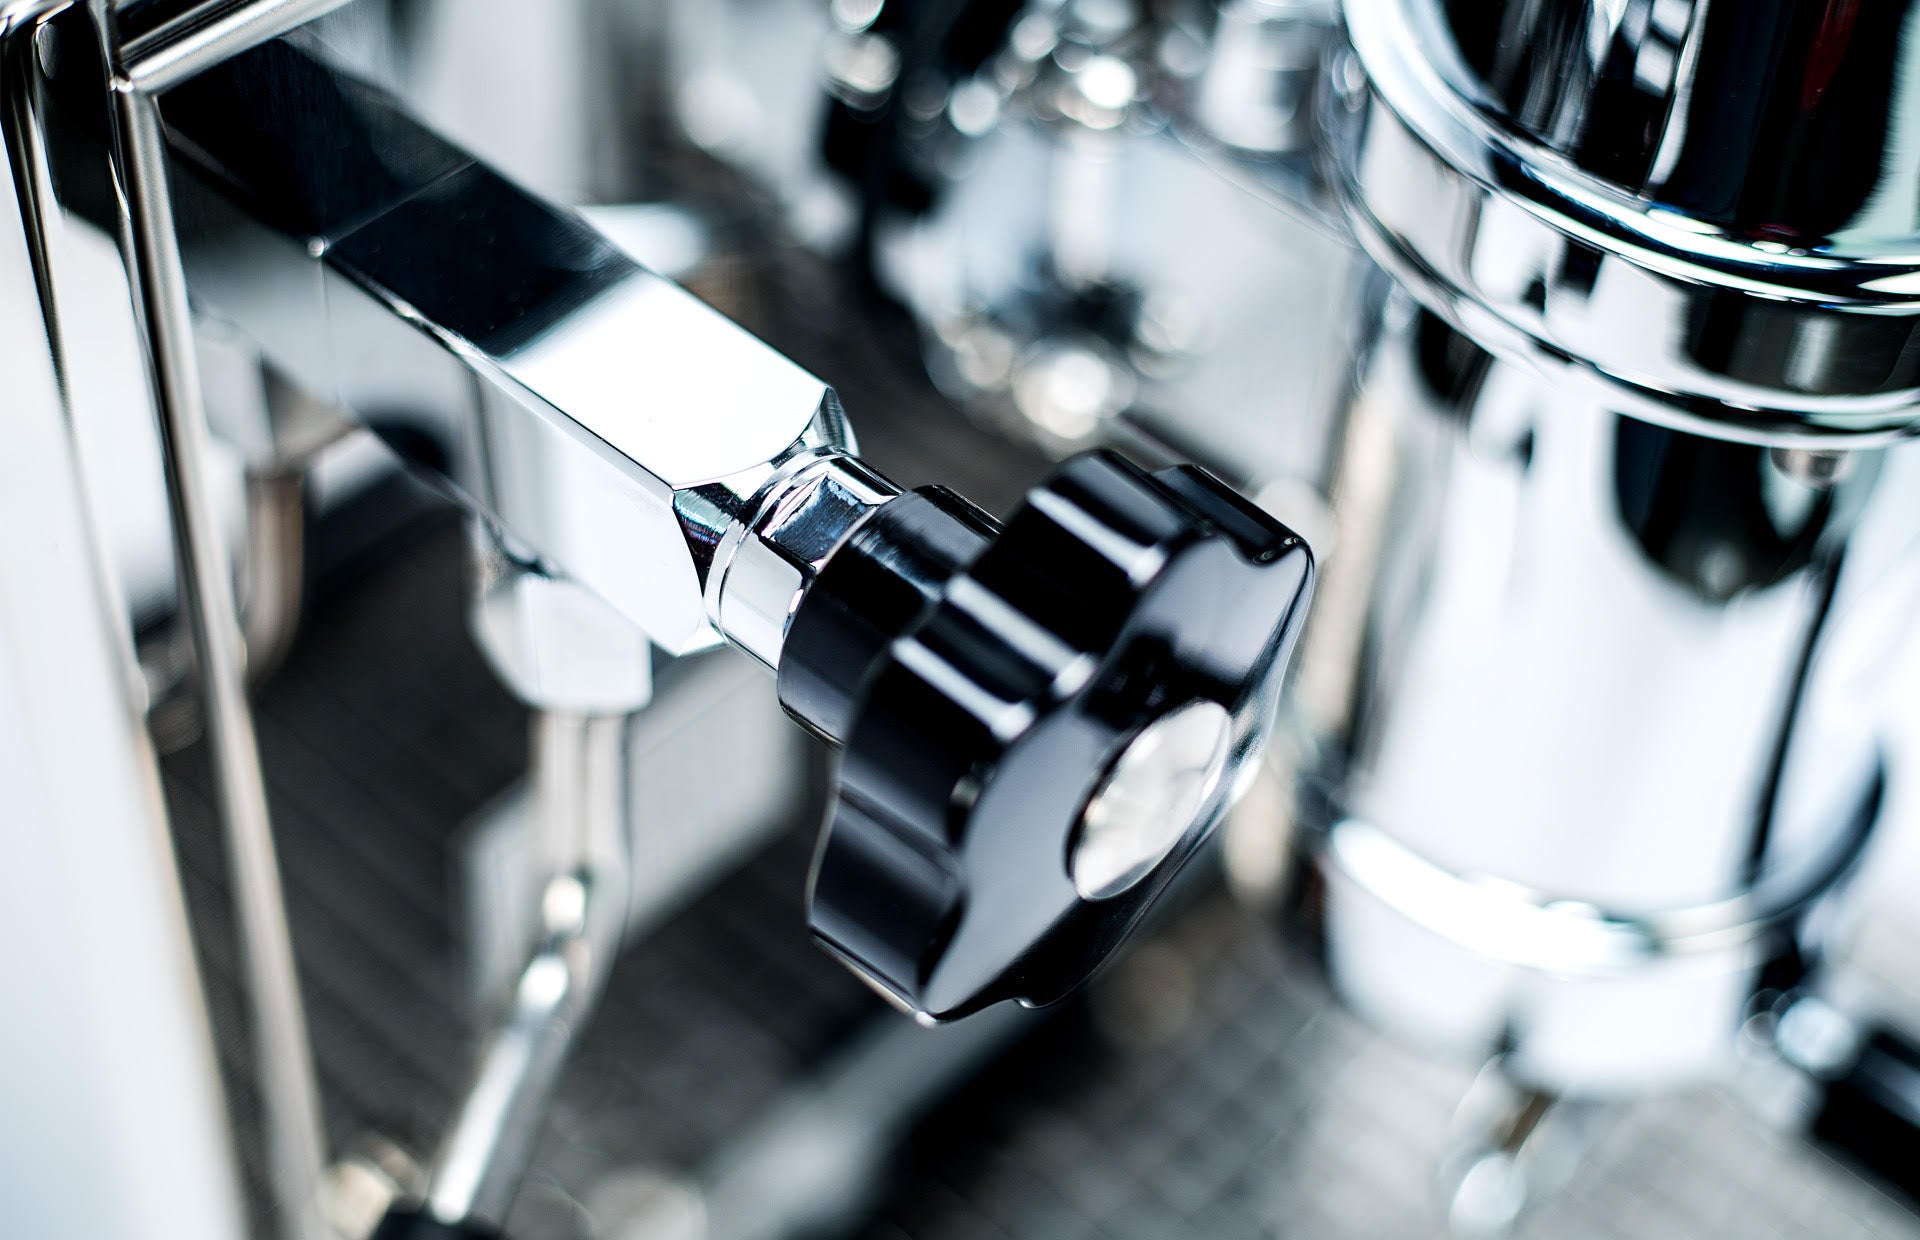 Profitec PRO 800 Lever Espresso Machine | Profitec Espresso Machine Collection | Shop CaffeTech | Best Espresso Machines